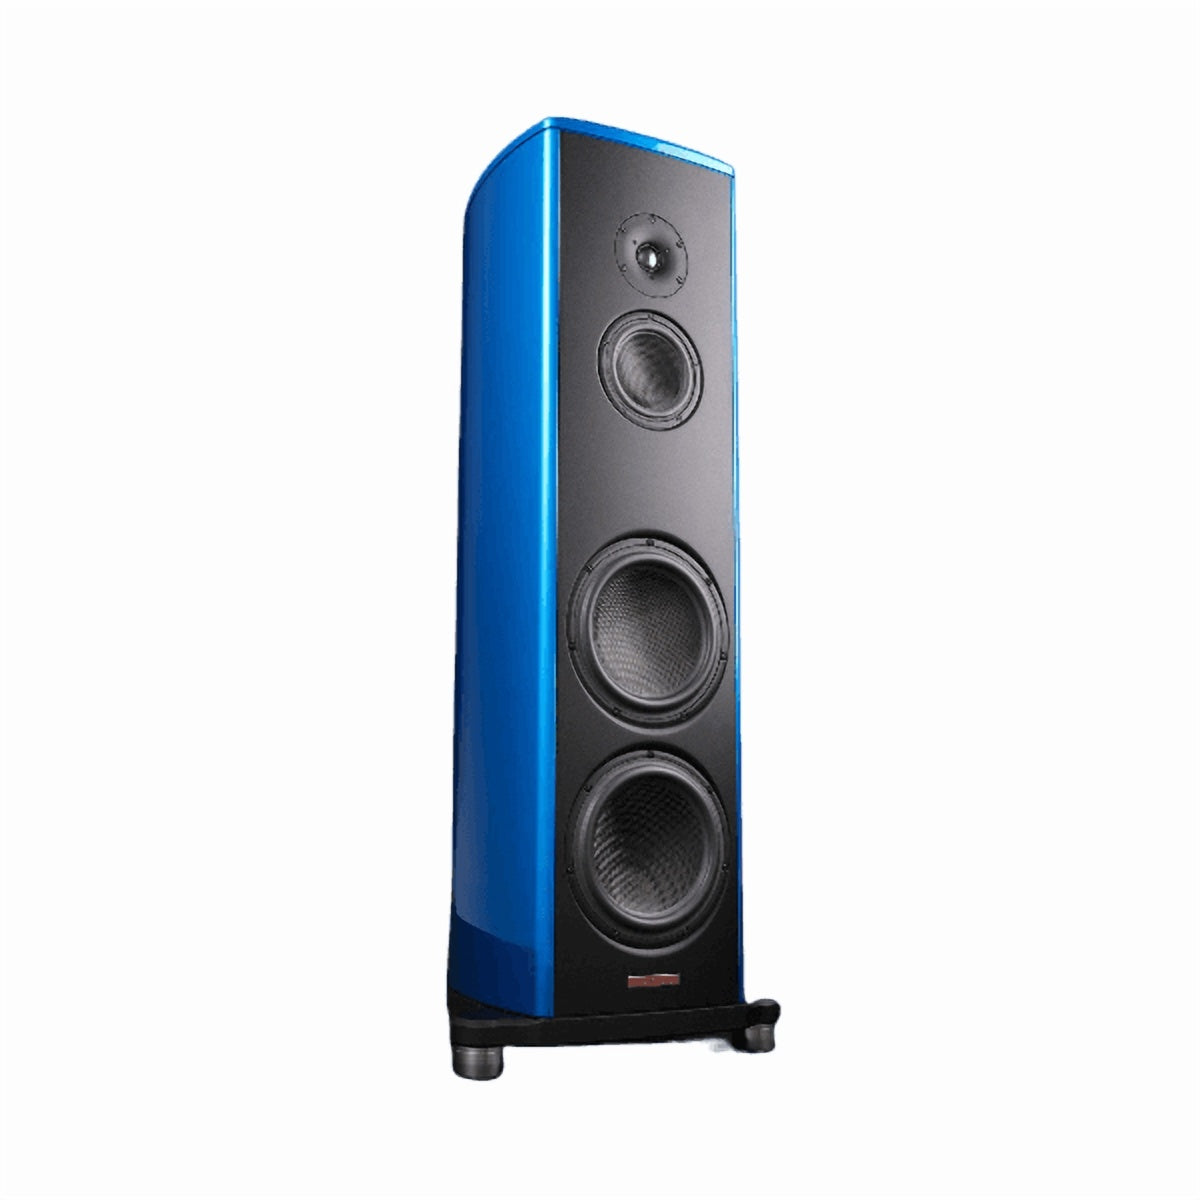 Magico S3 Floorstanding Speaker in Blue